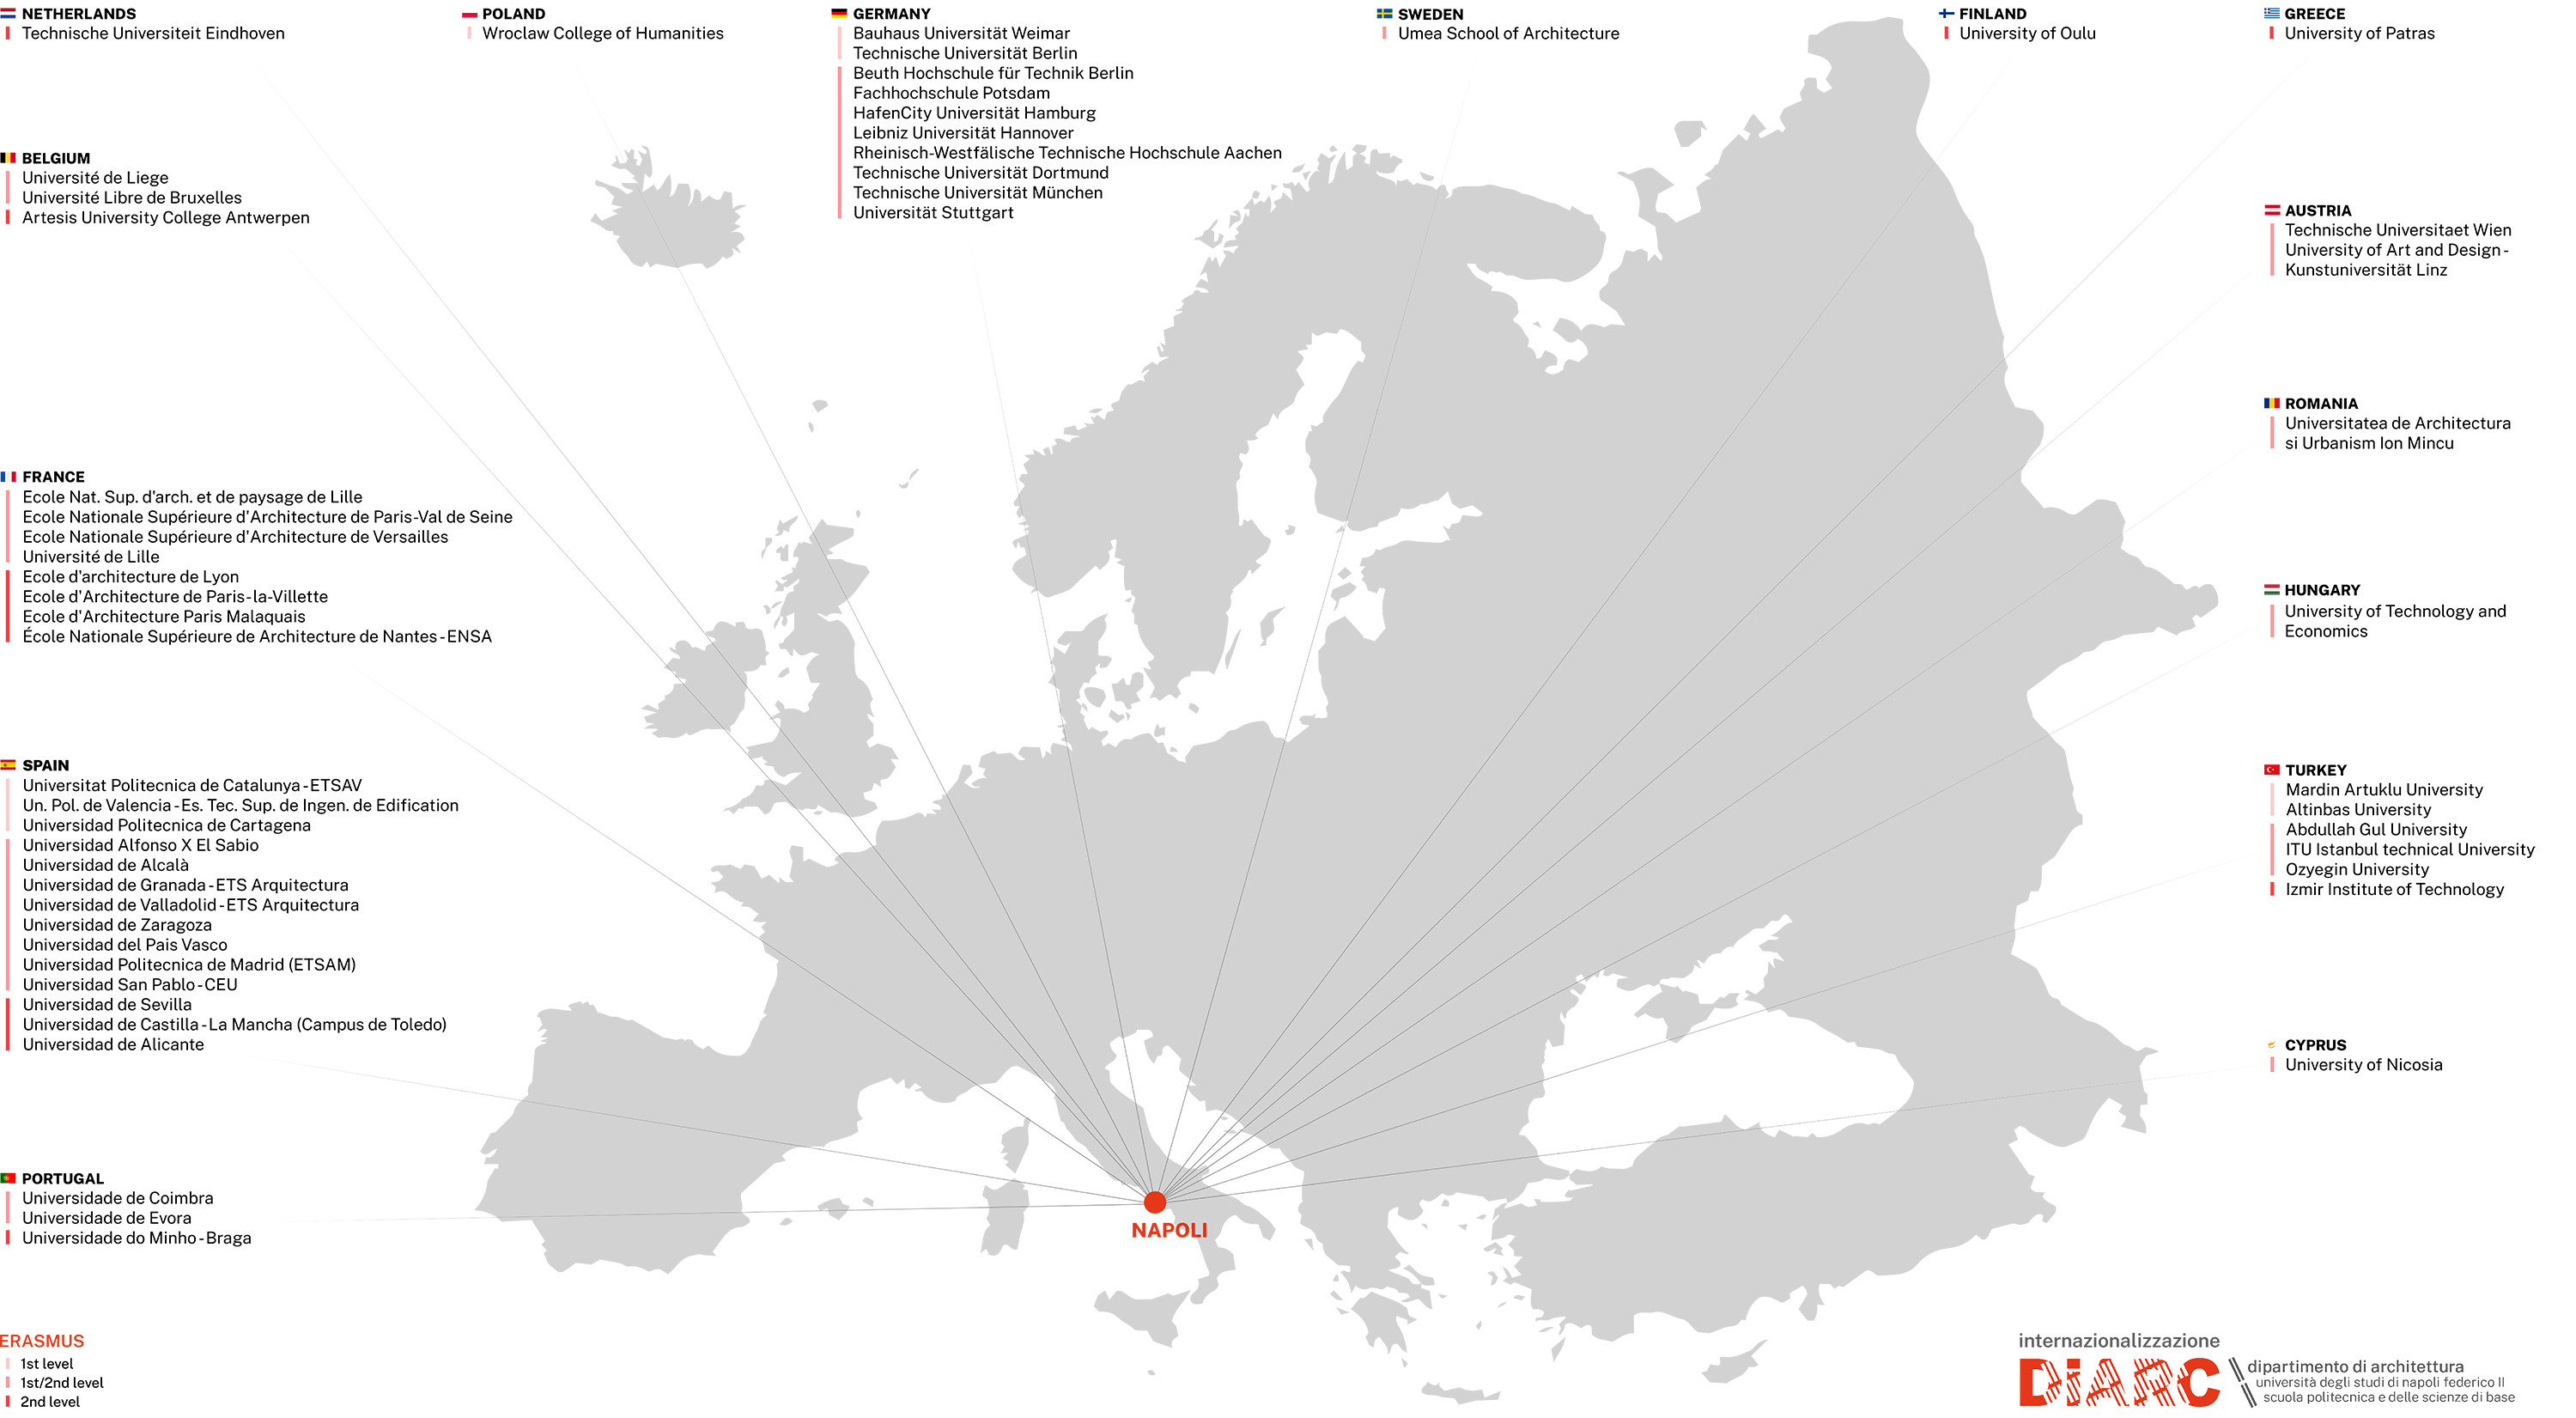 DIARCINT ERASMUS MAP 01